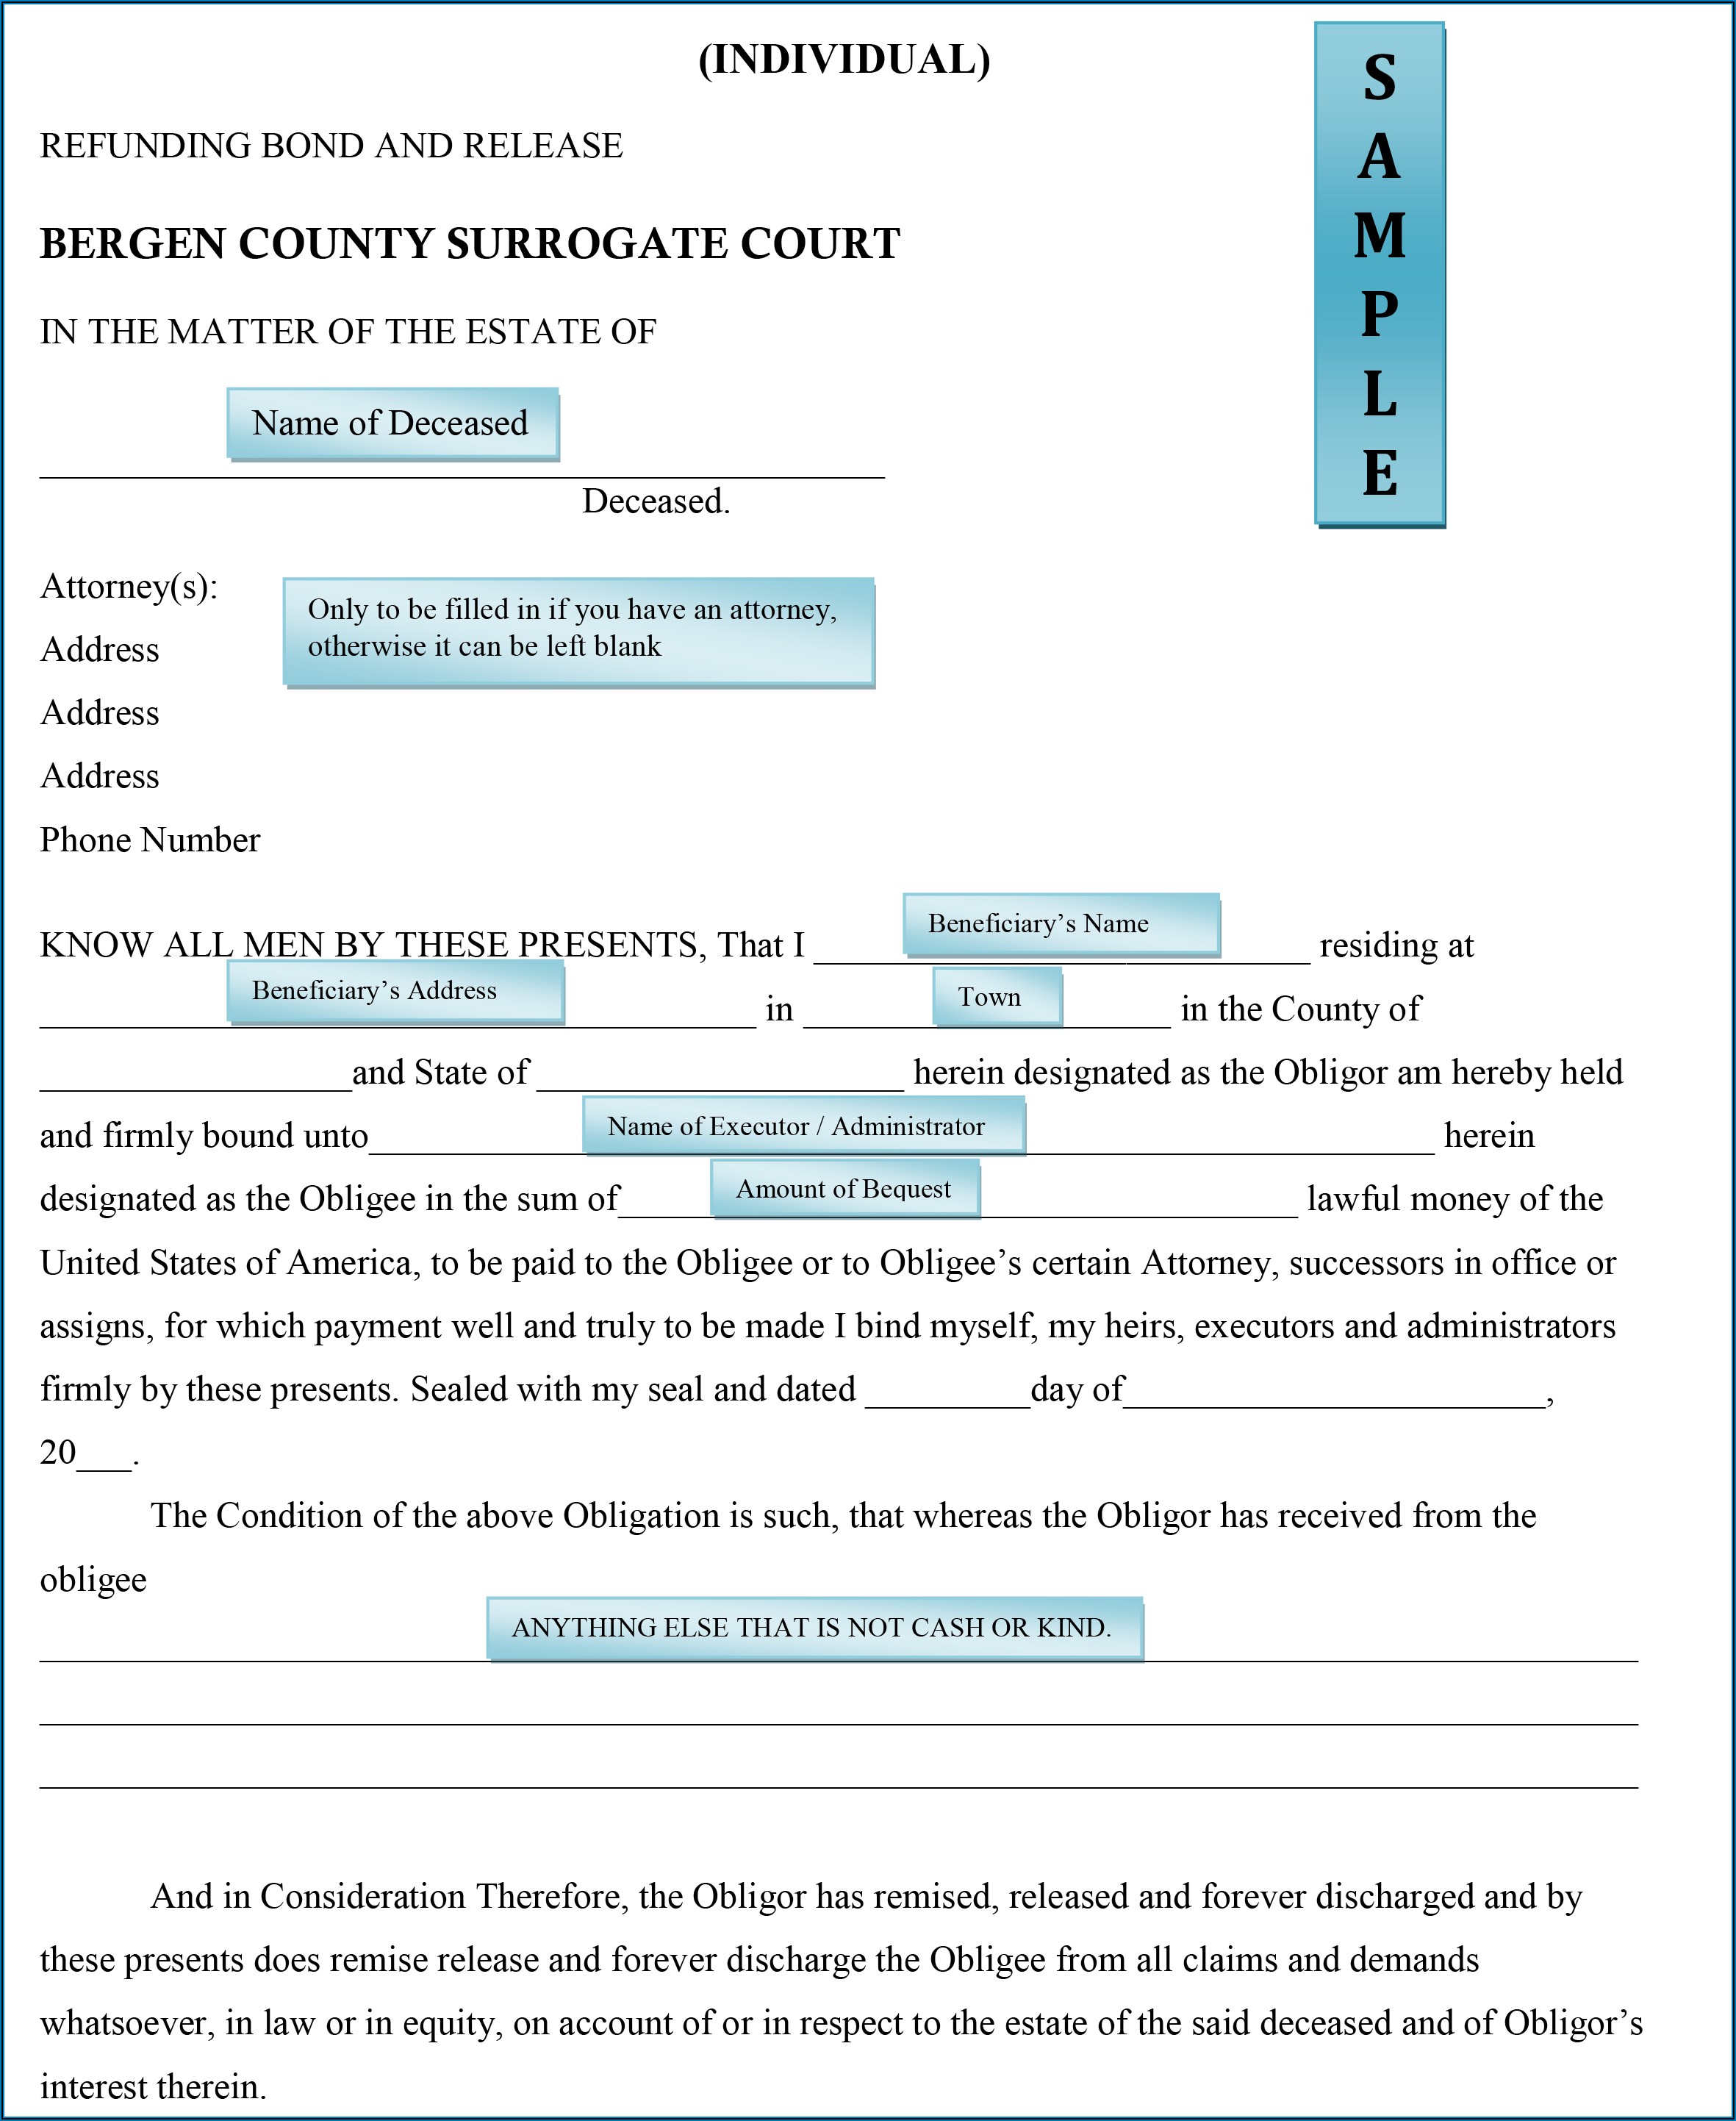 Essex County Surrogate Court Forms